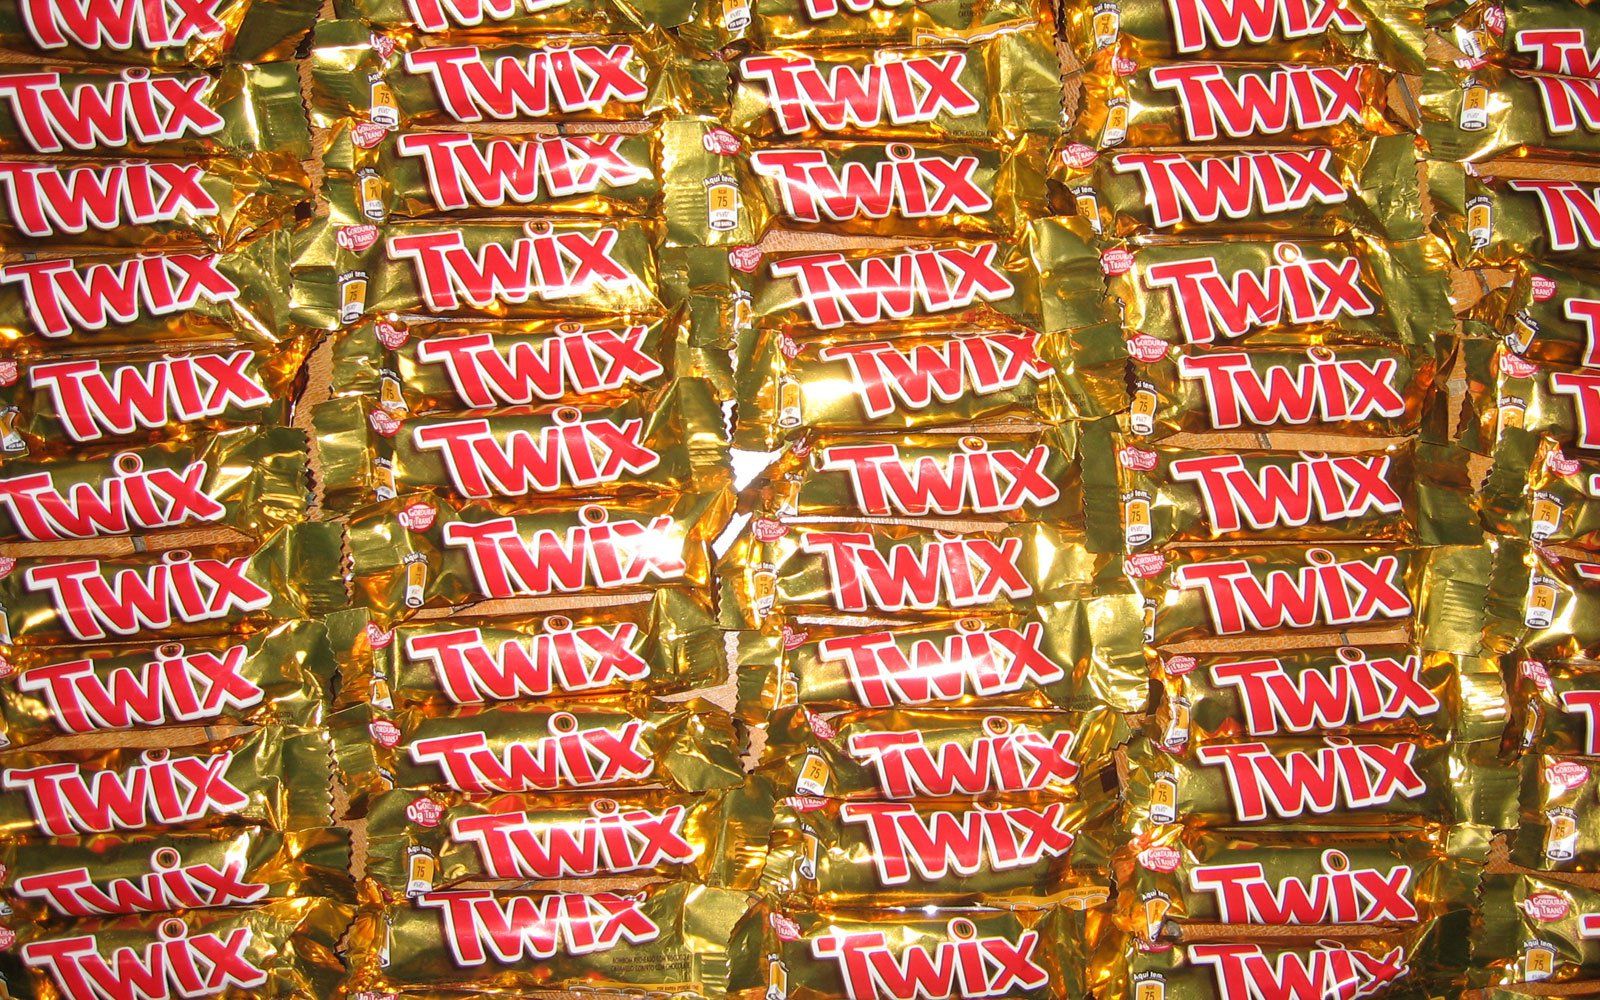 Twix Candy Bars Wallpaper 62631 1600x1000px